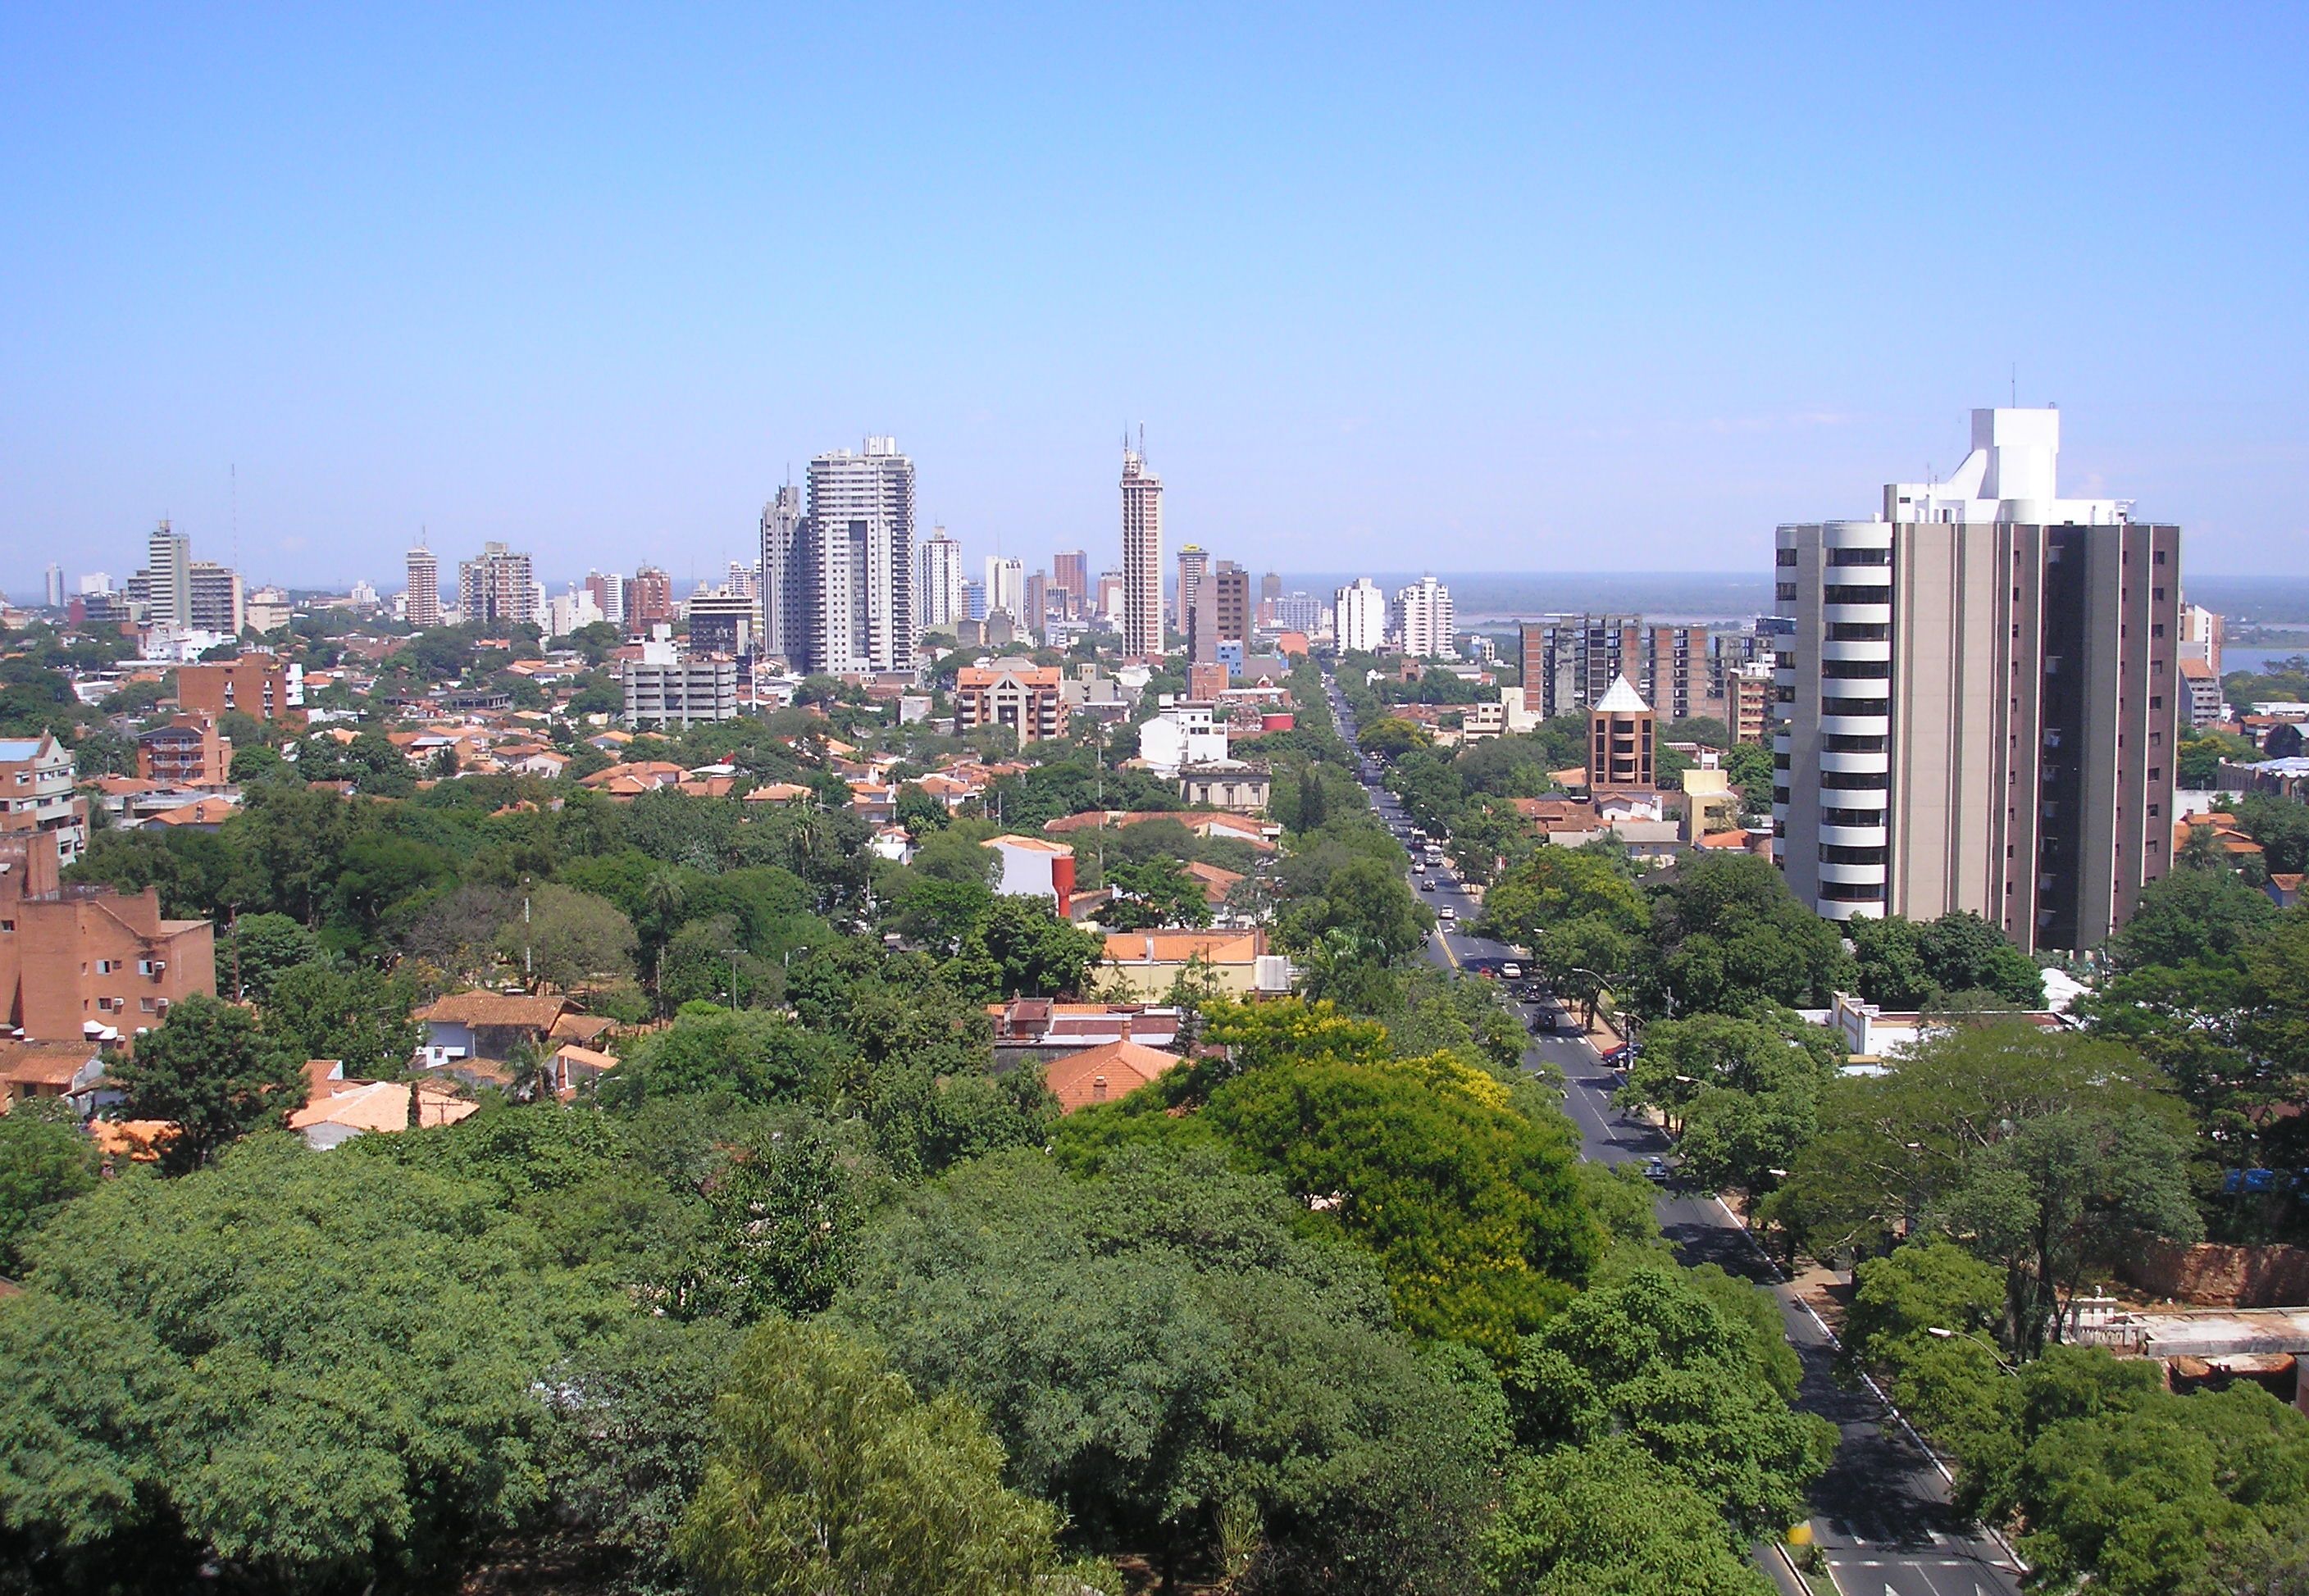 file-capital-de-paraguay-jpg-wikimedia-commons